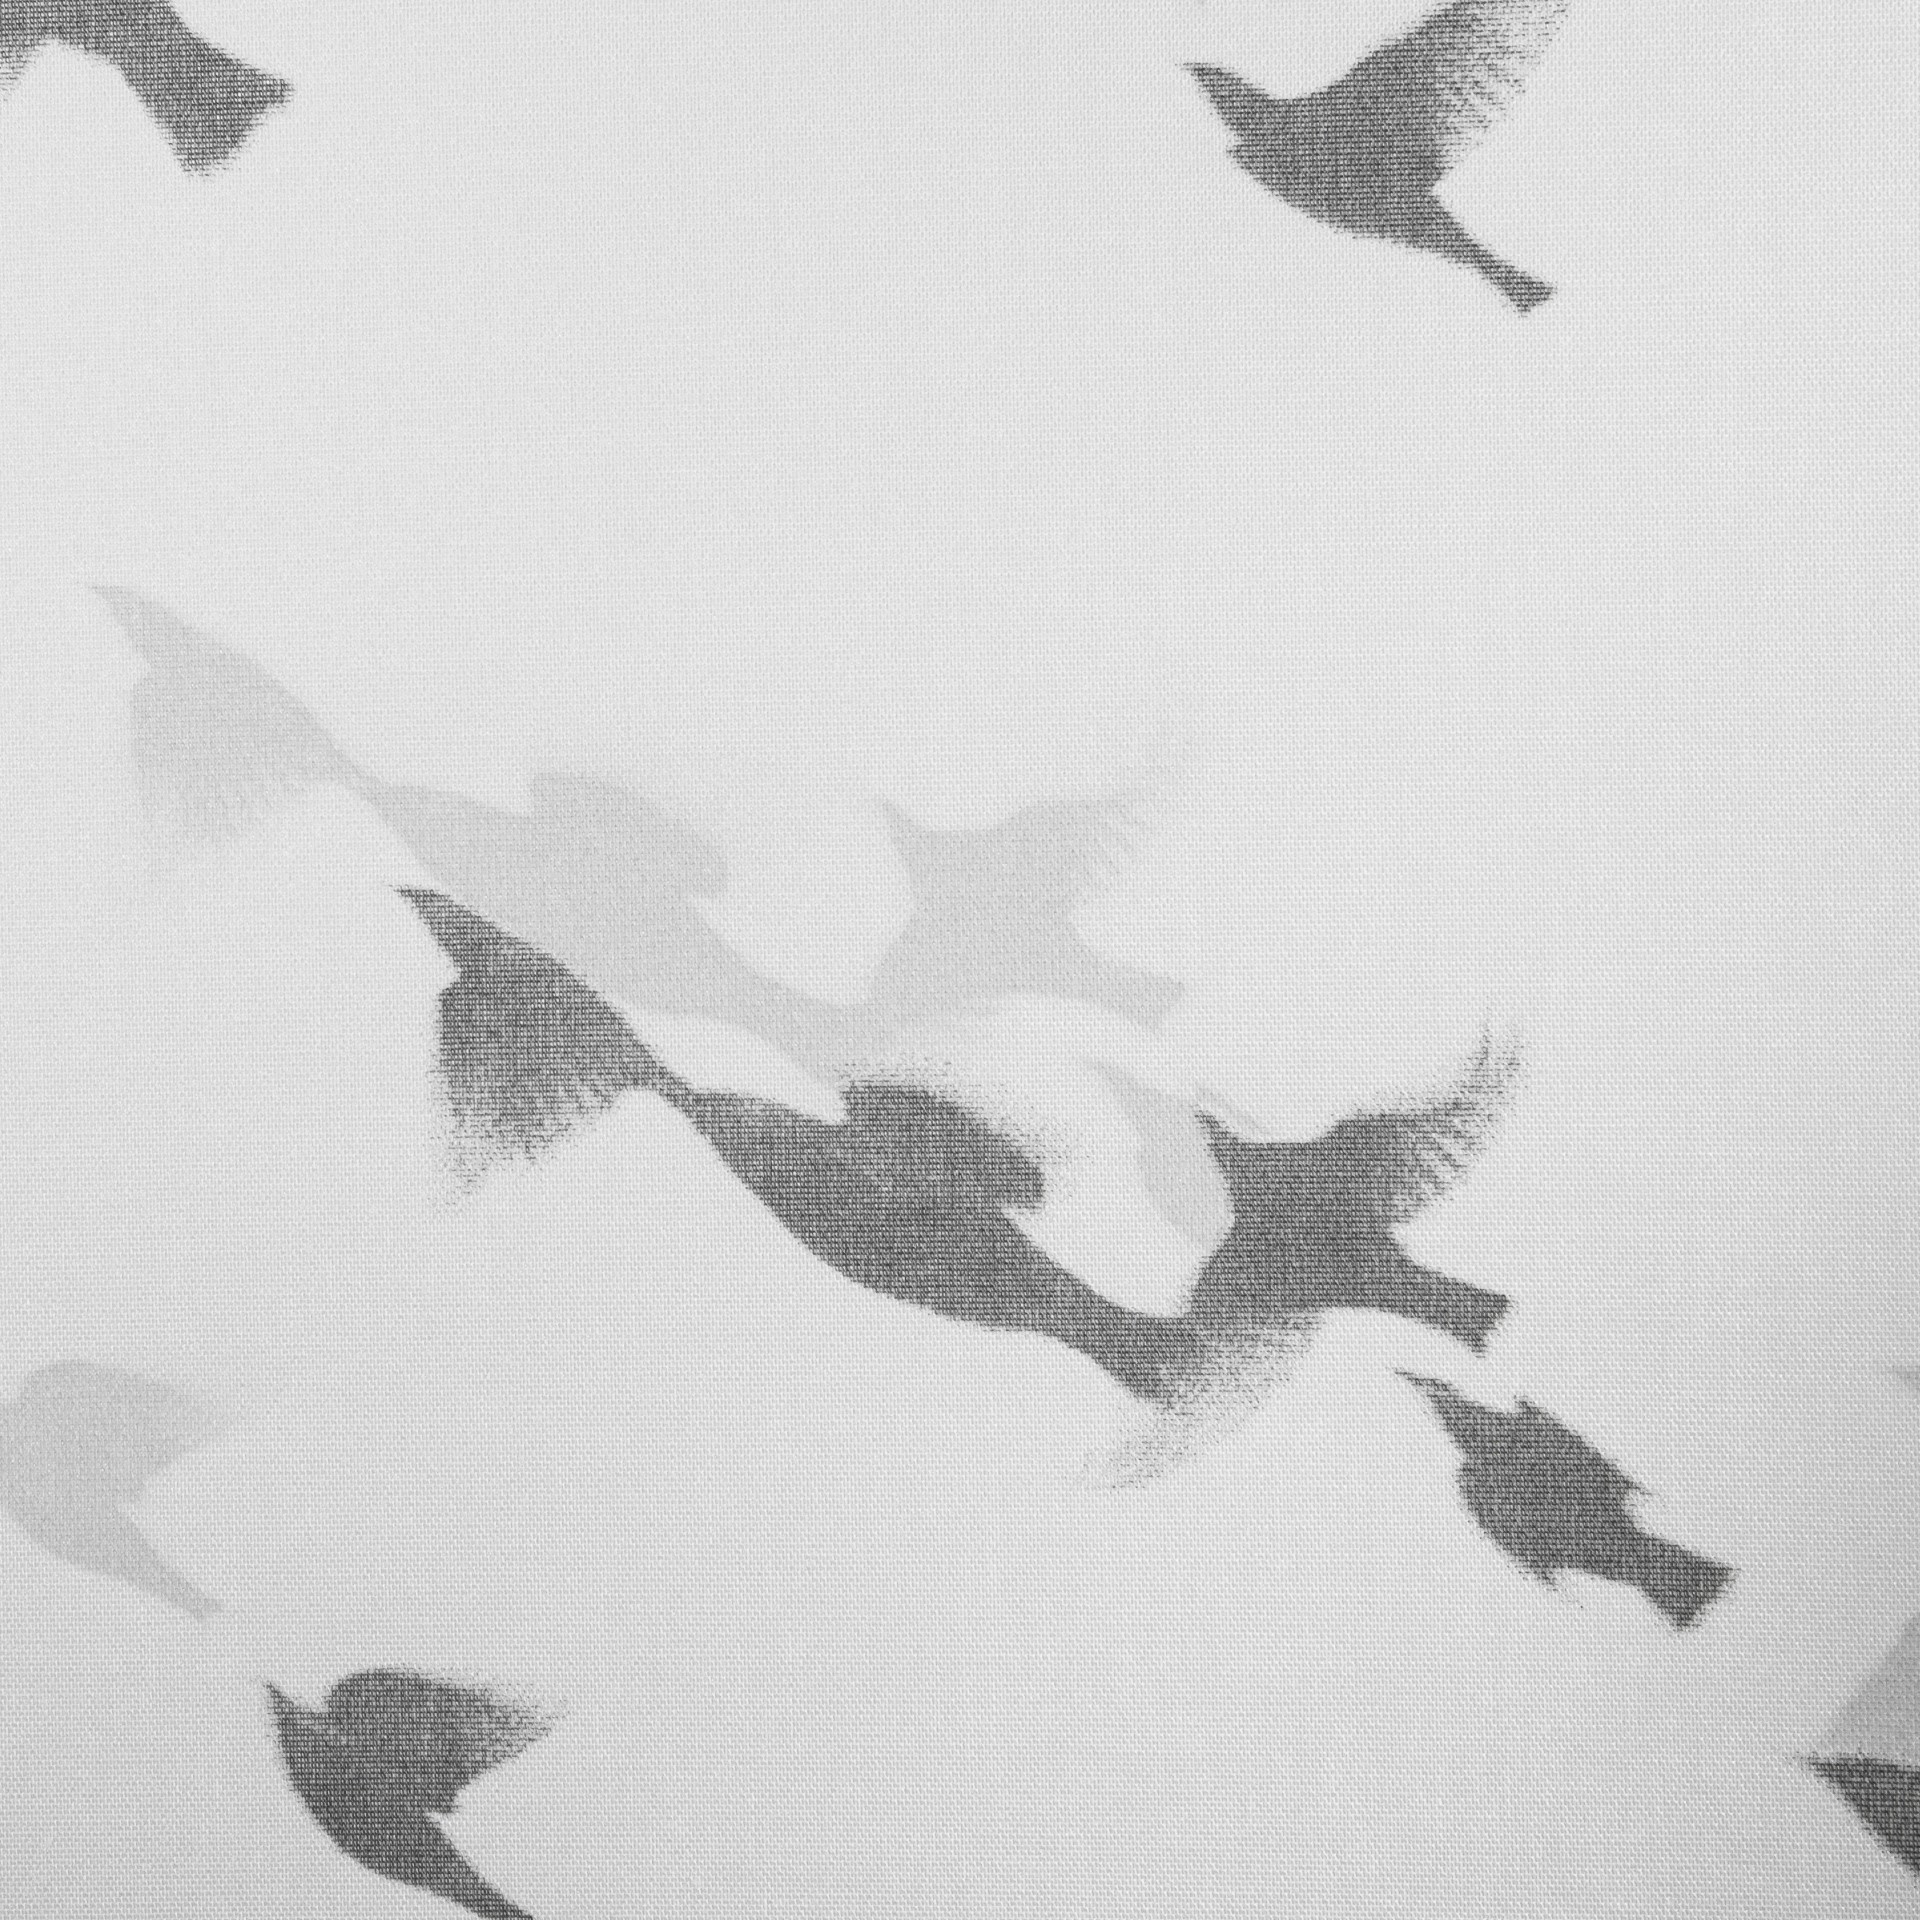 Aves de Paso Translucent Roller Blind White Fabric Detail